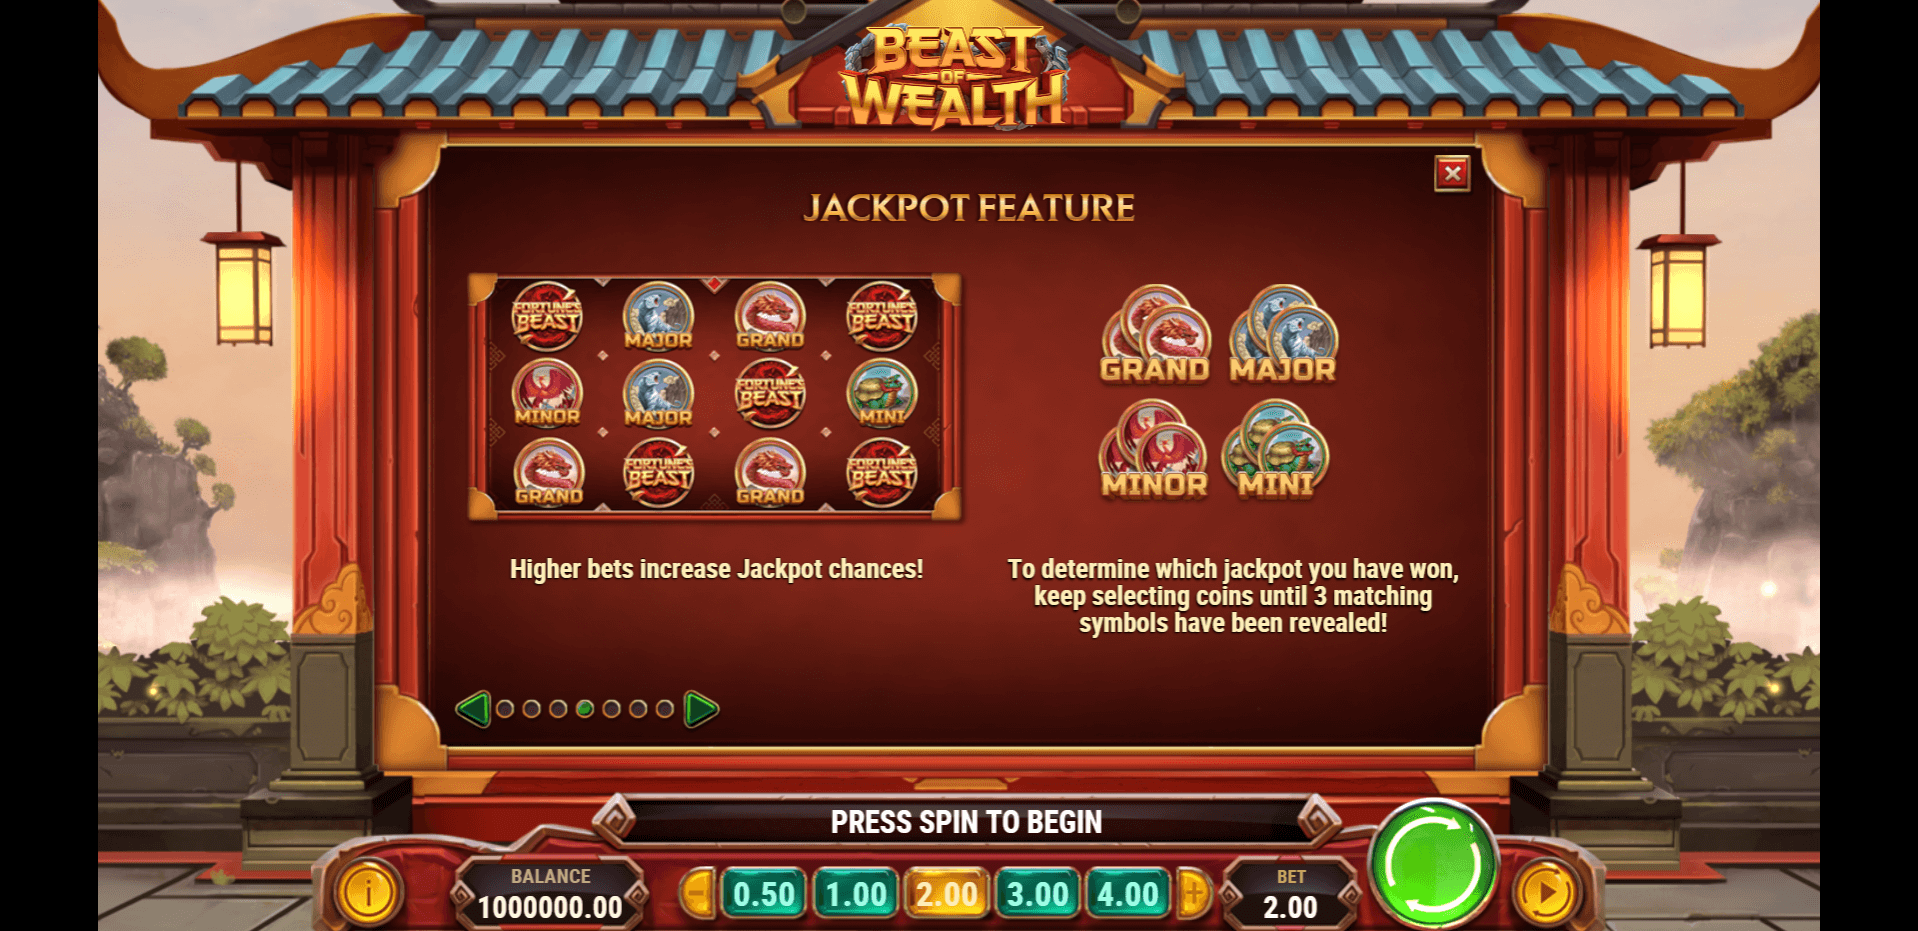 beast of wealth slot machine detail image 4